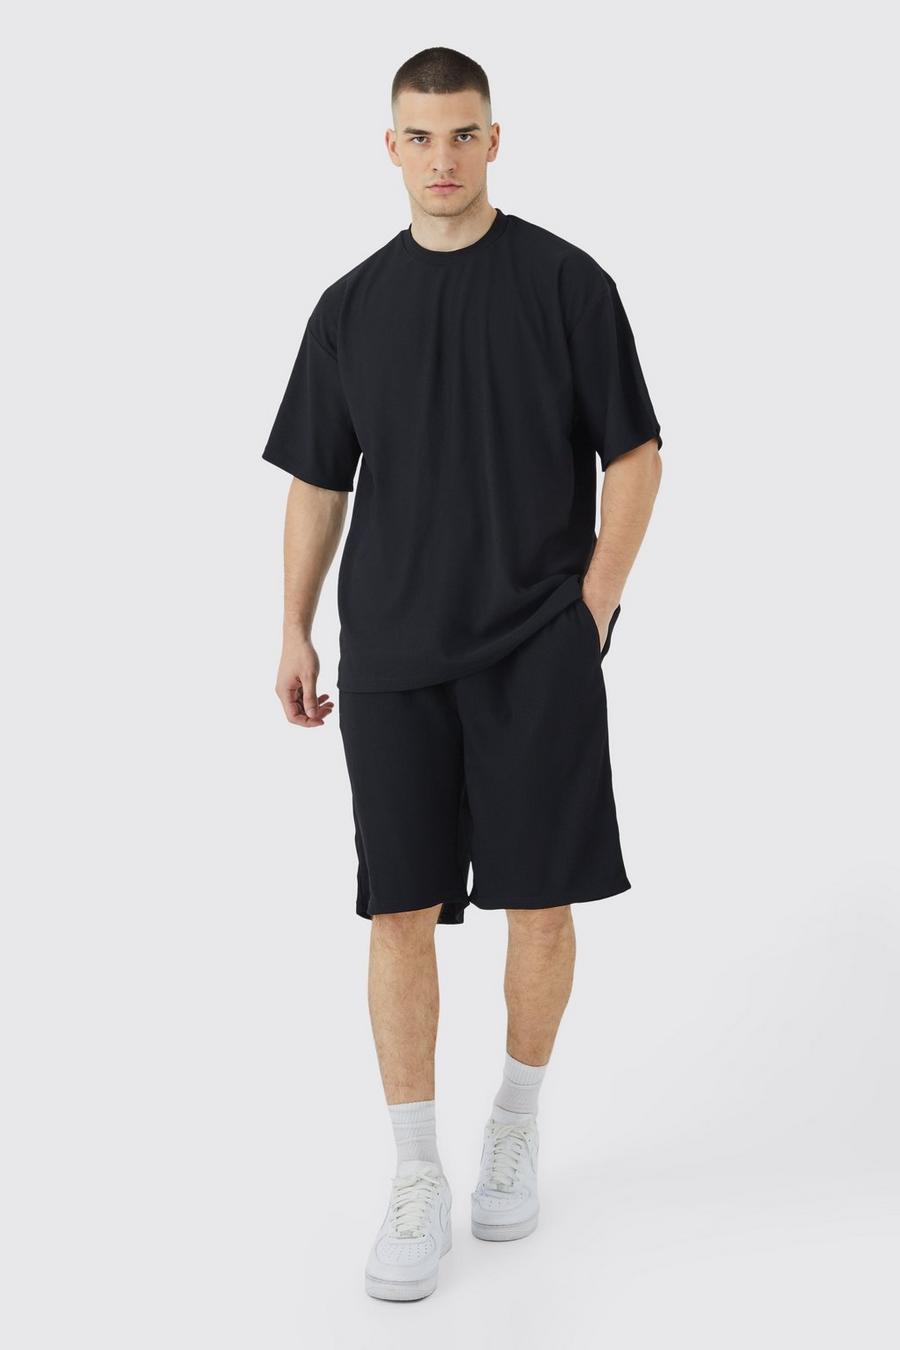 Black noir Tall Oversized Ottoman Rib T-shirt Short Set